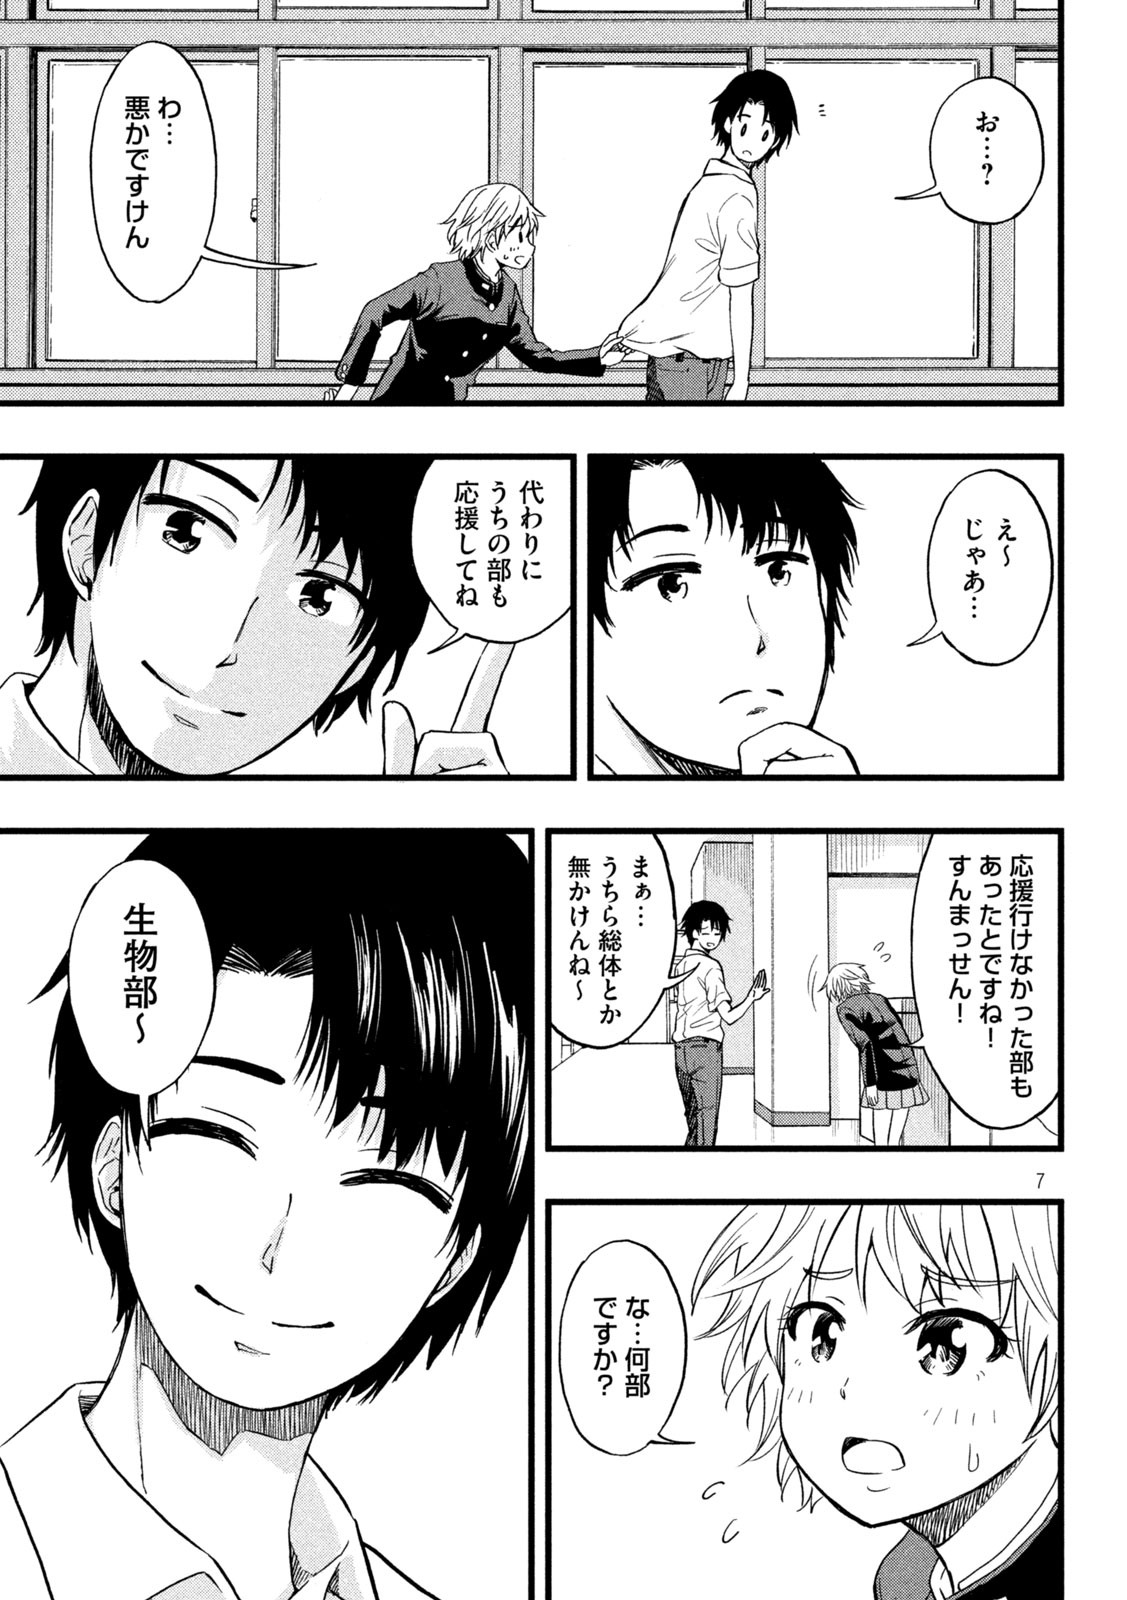 Koharu haru! - Chapter 39 - Page 7